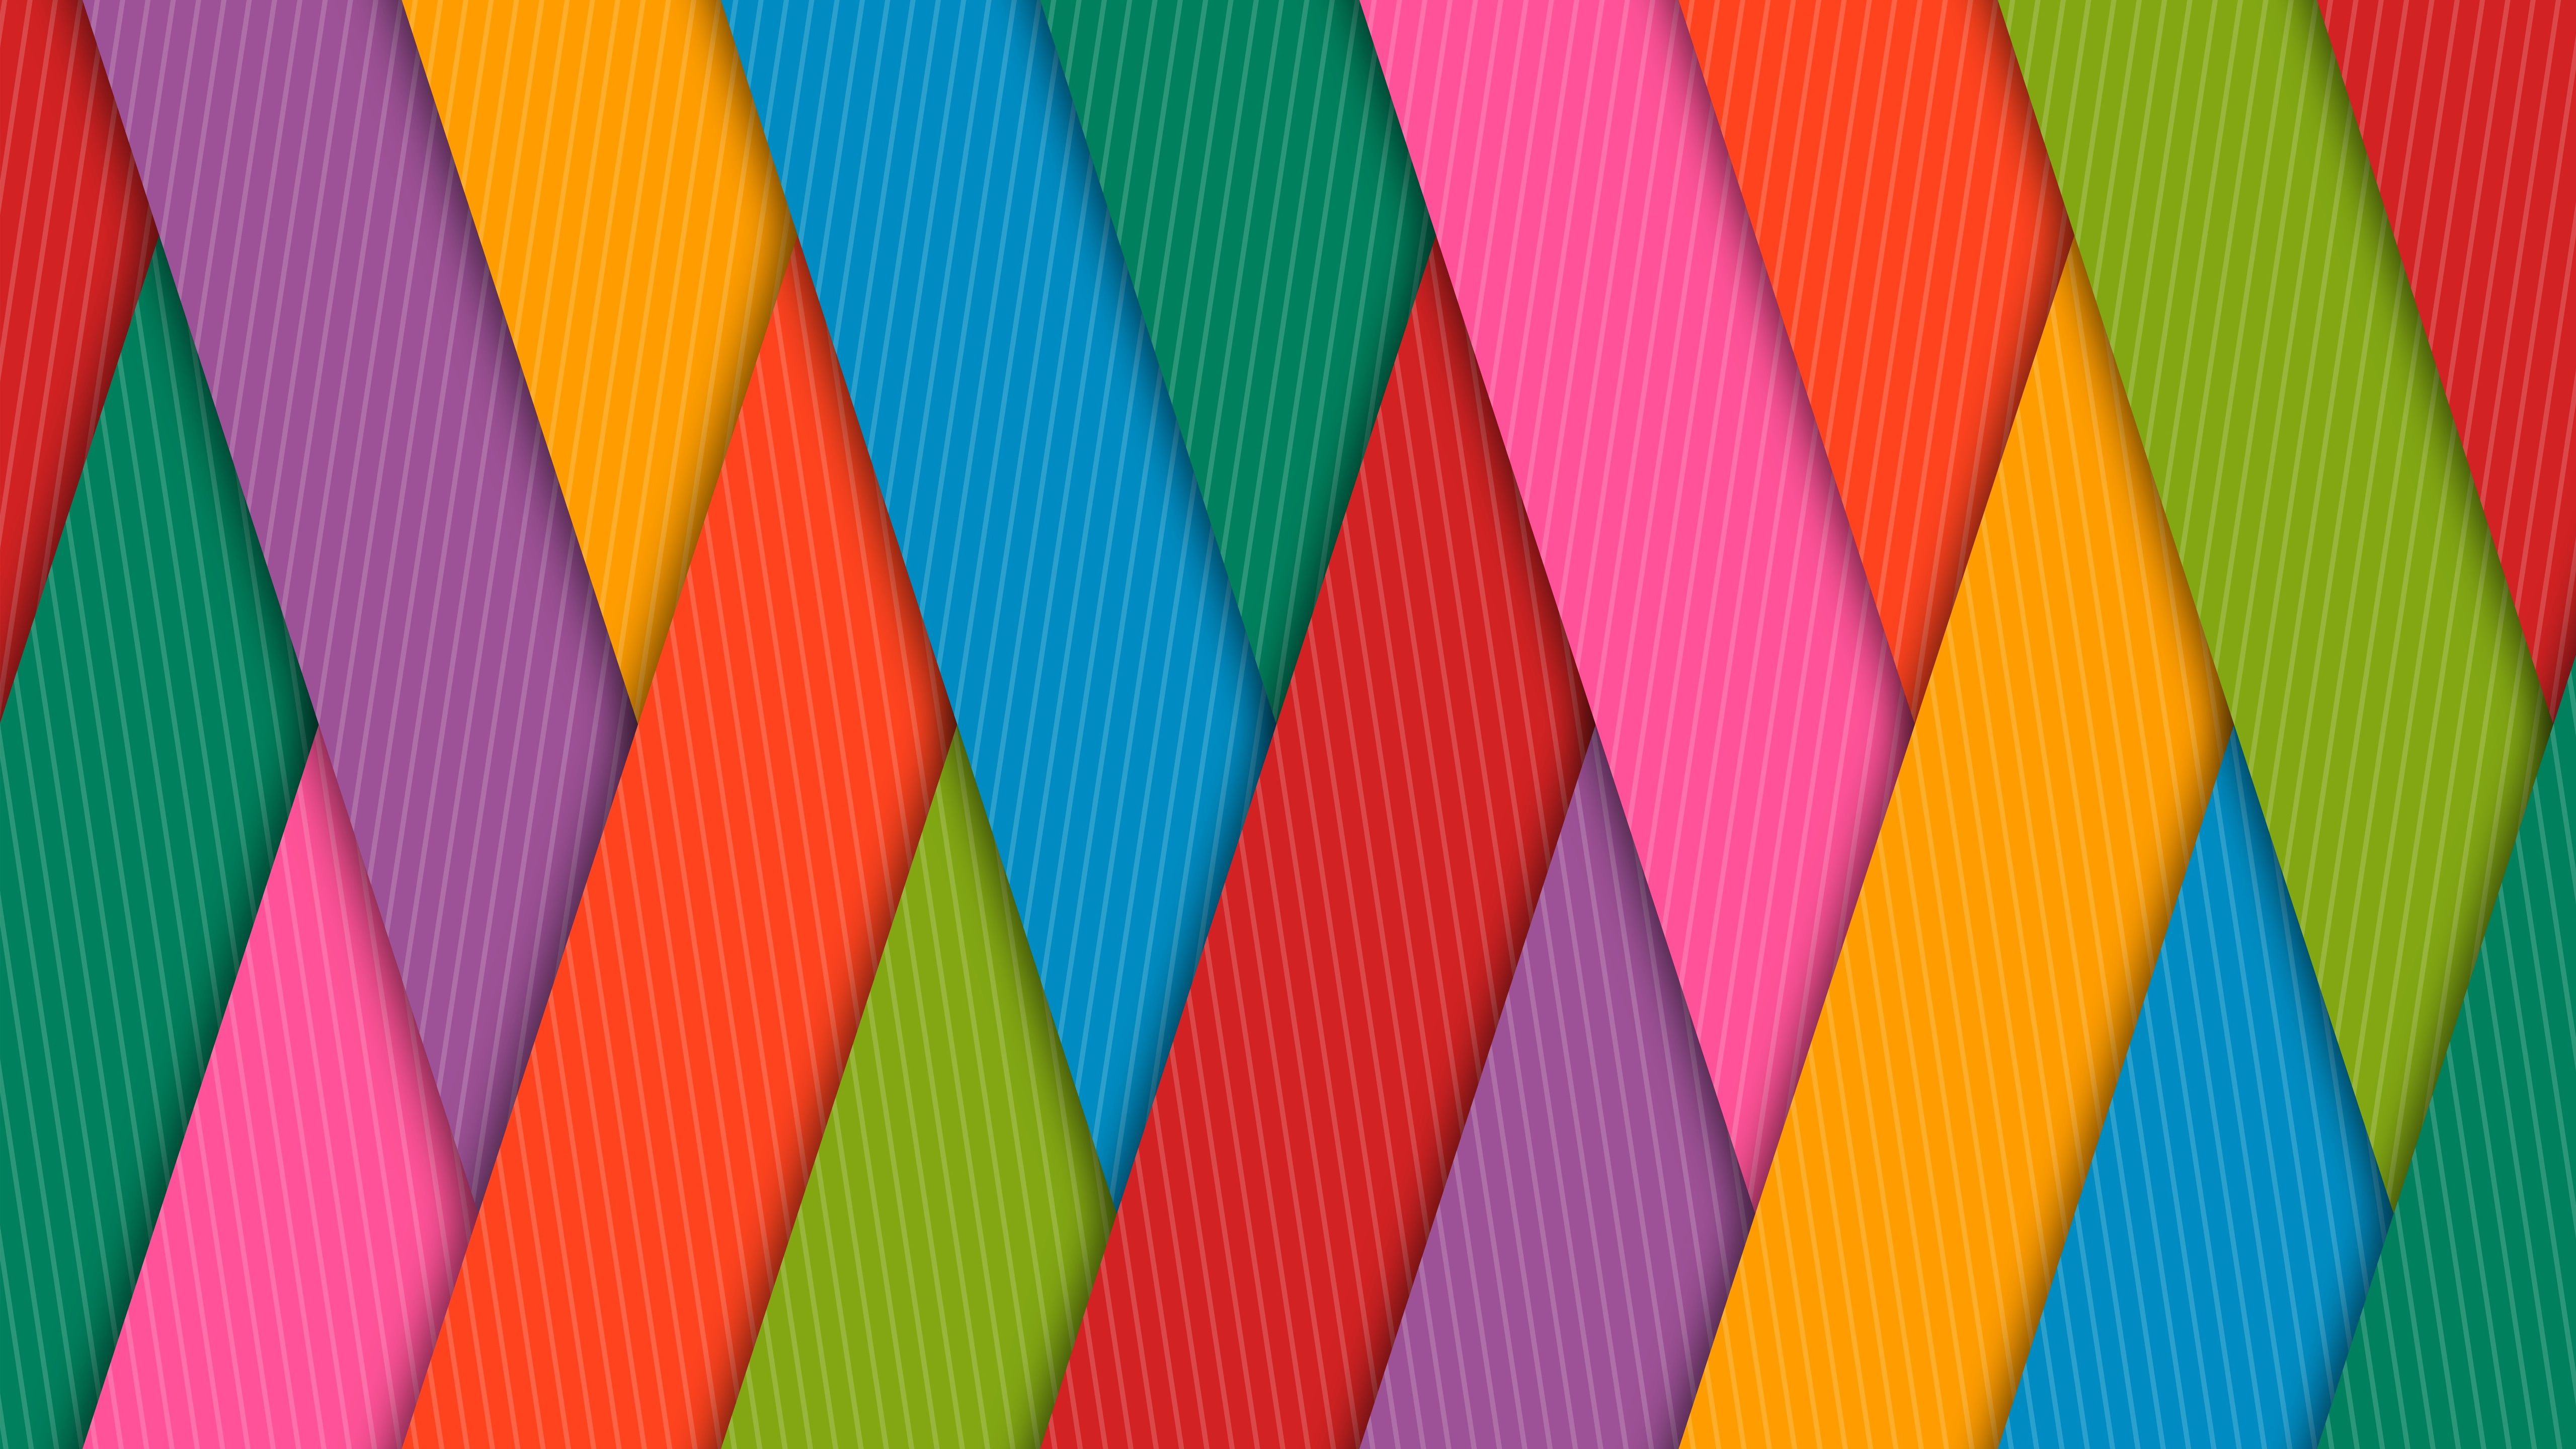 Colorful Strips 4K 5K Wallpaper in jpg format for free download